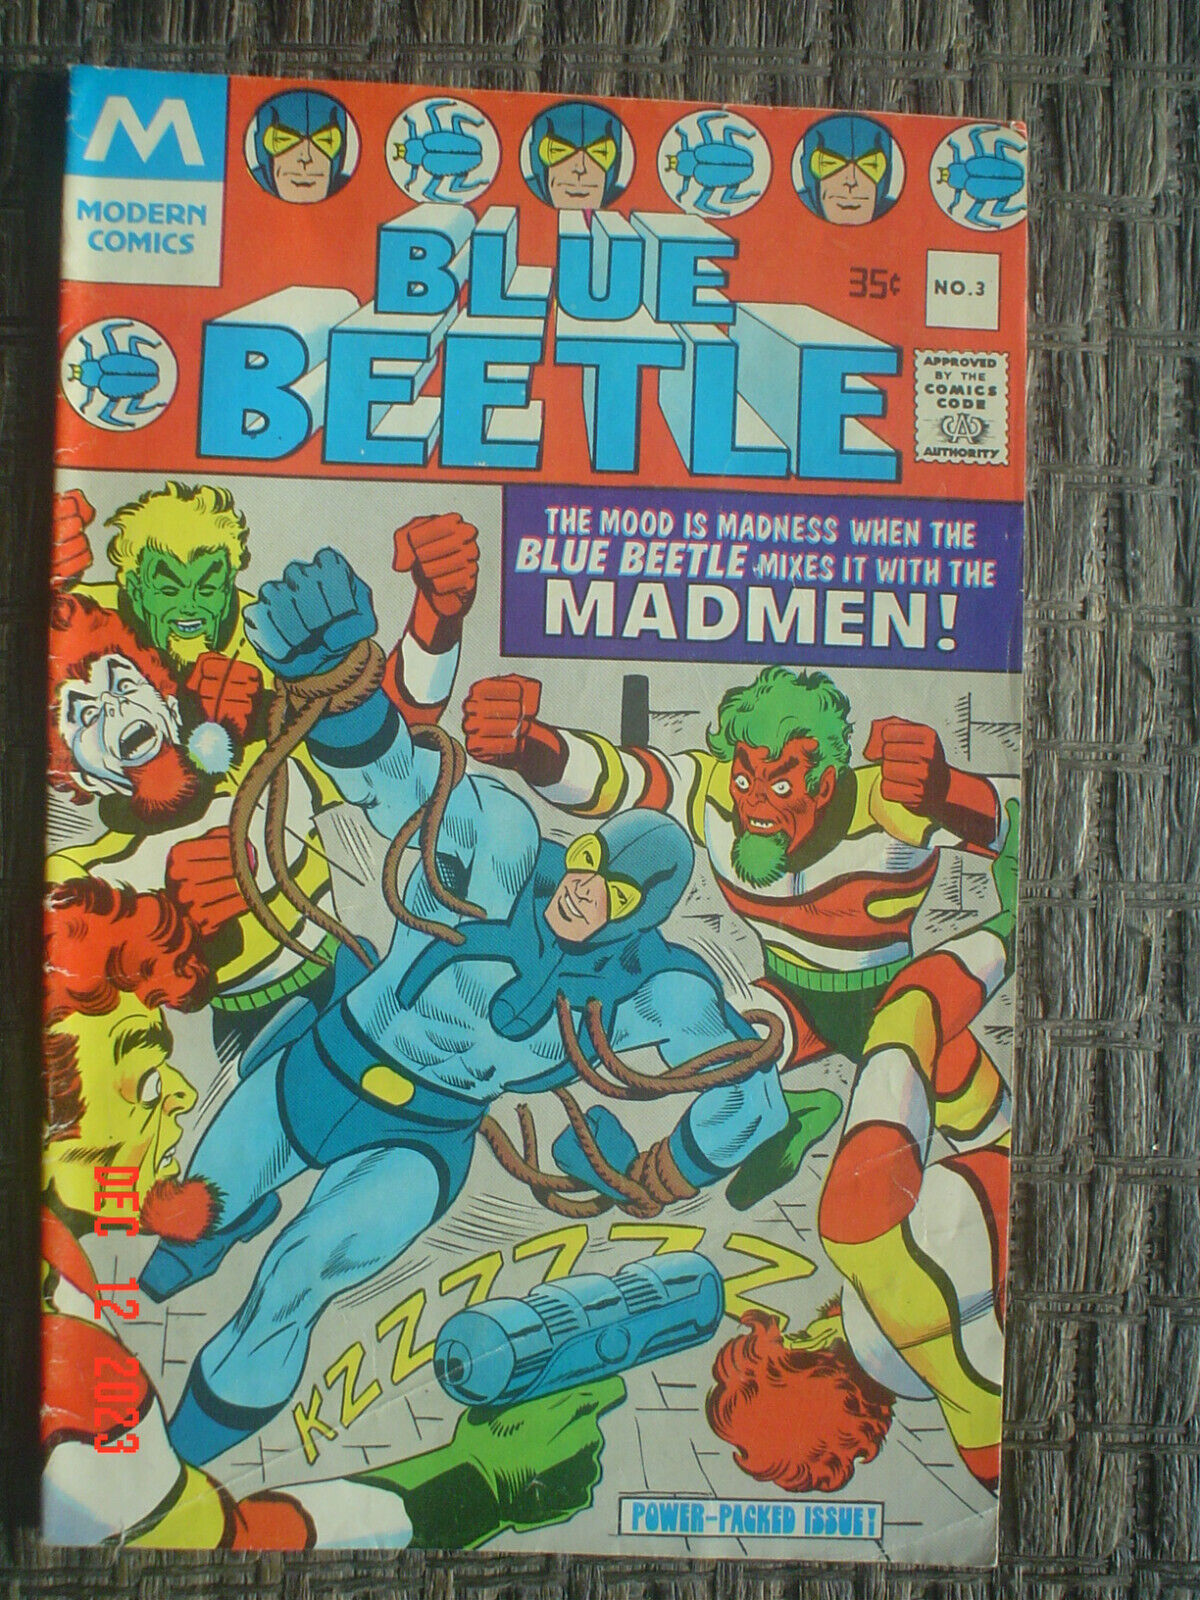 BLUE BEETLE #3 - MODERN COMICS - 1977 - GOOD CONDITION